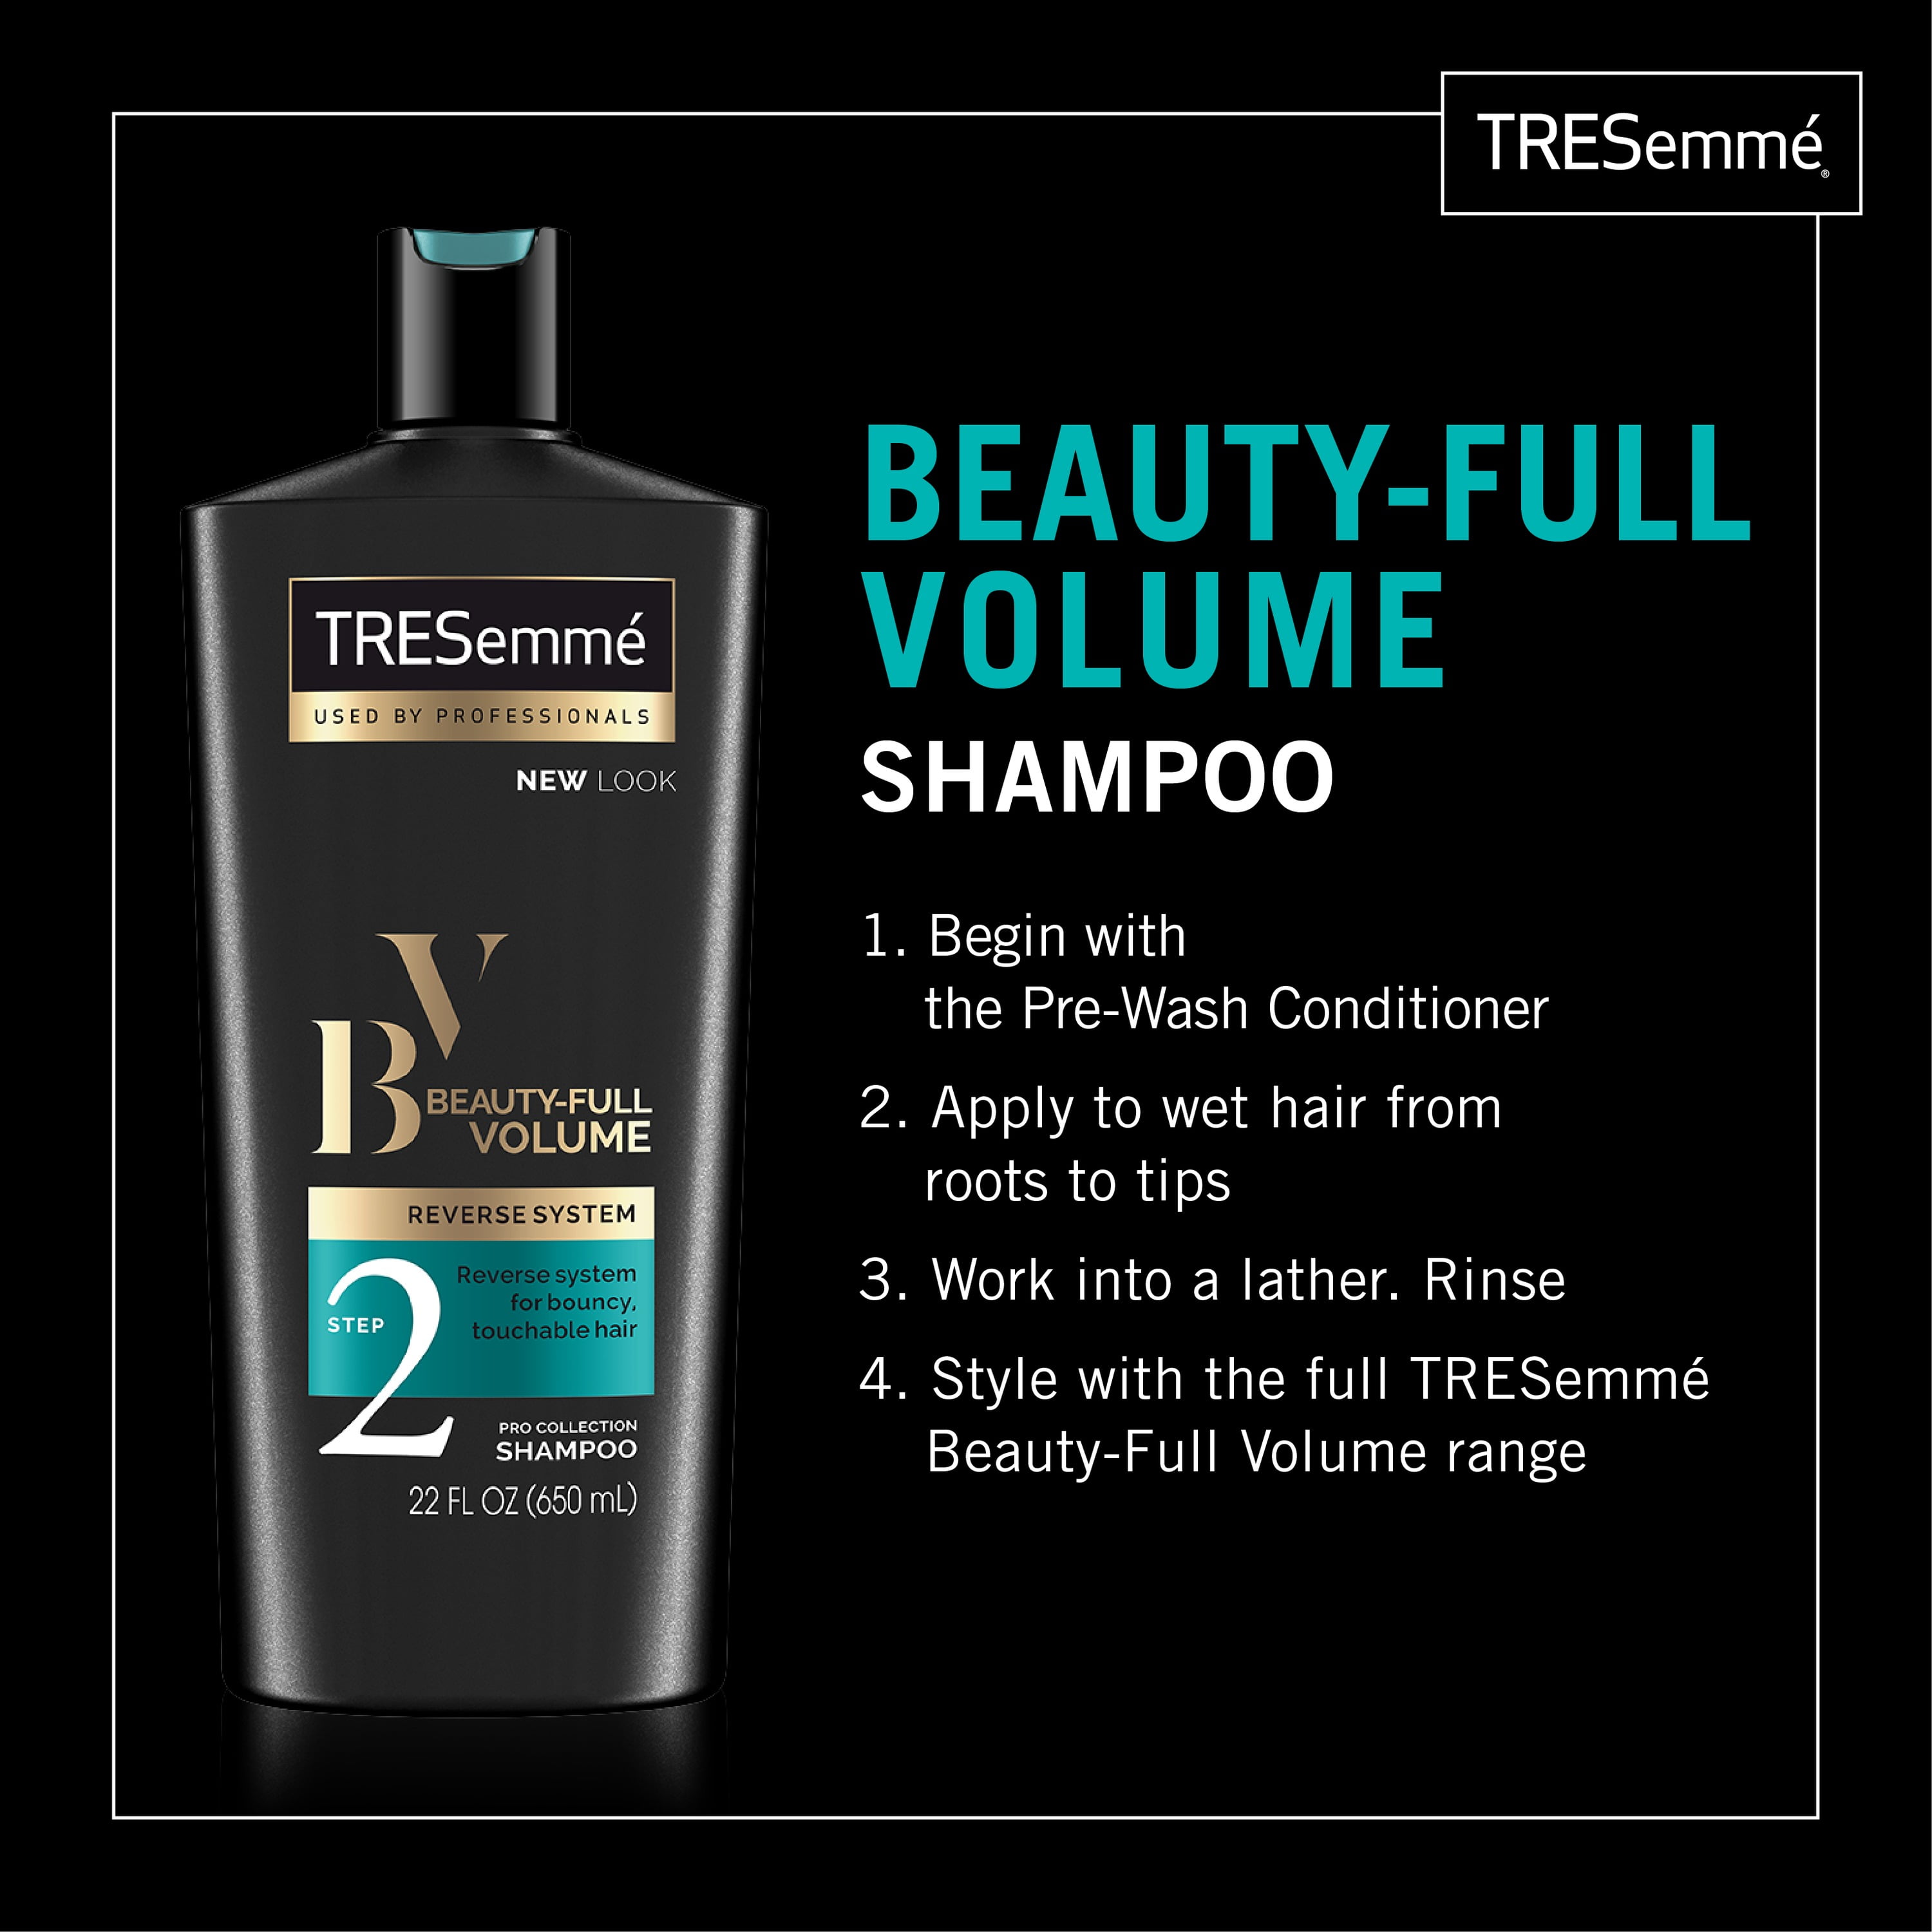 Tresemme Pro Collection Shampoo - Beauty-Full Volume Reverse System - Step 2 - Net Wt. 22 OZ (650 mL) Bottle - Pack of 2 Bottles -